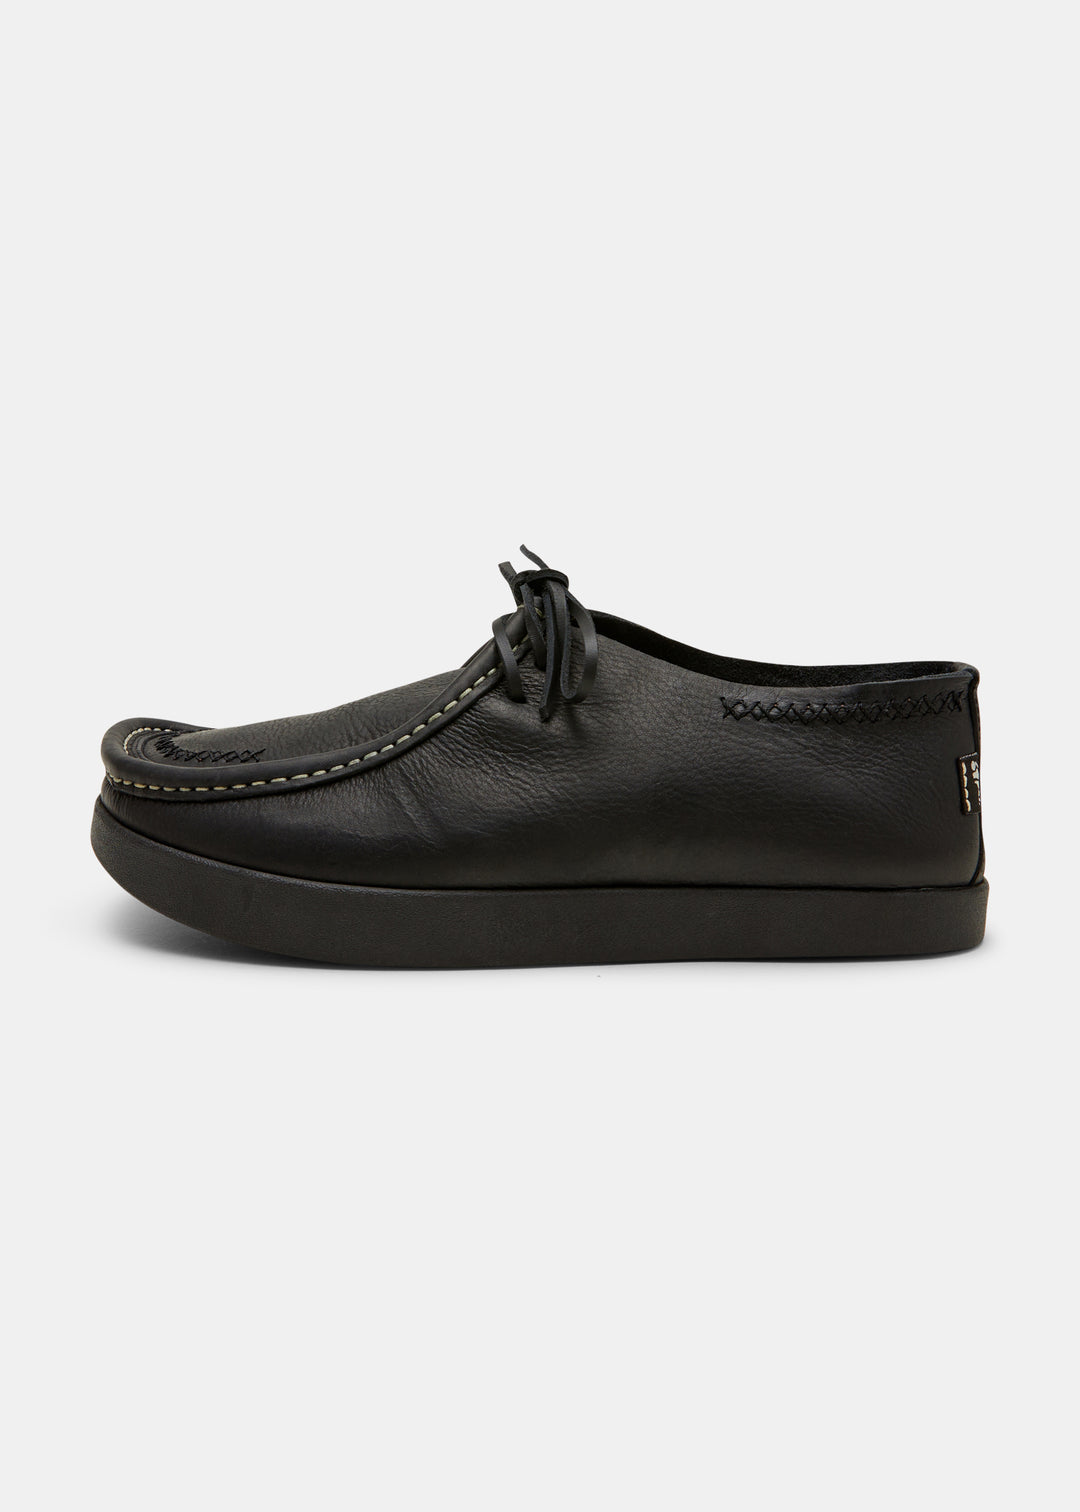 Yogi Willard Stitch Tumbled Leather Shoe - Black - Overview